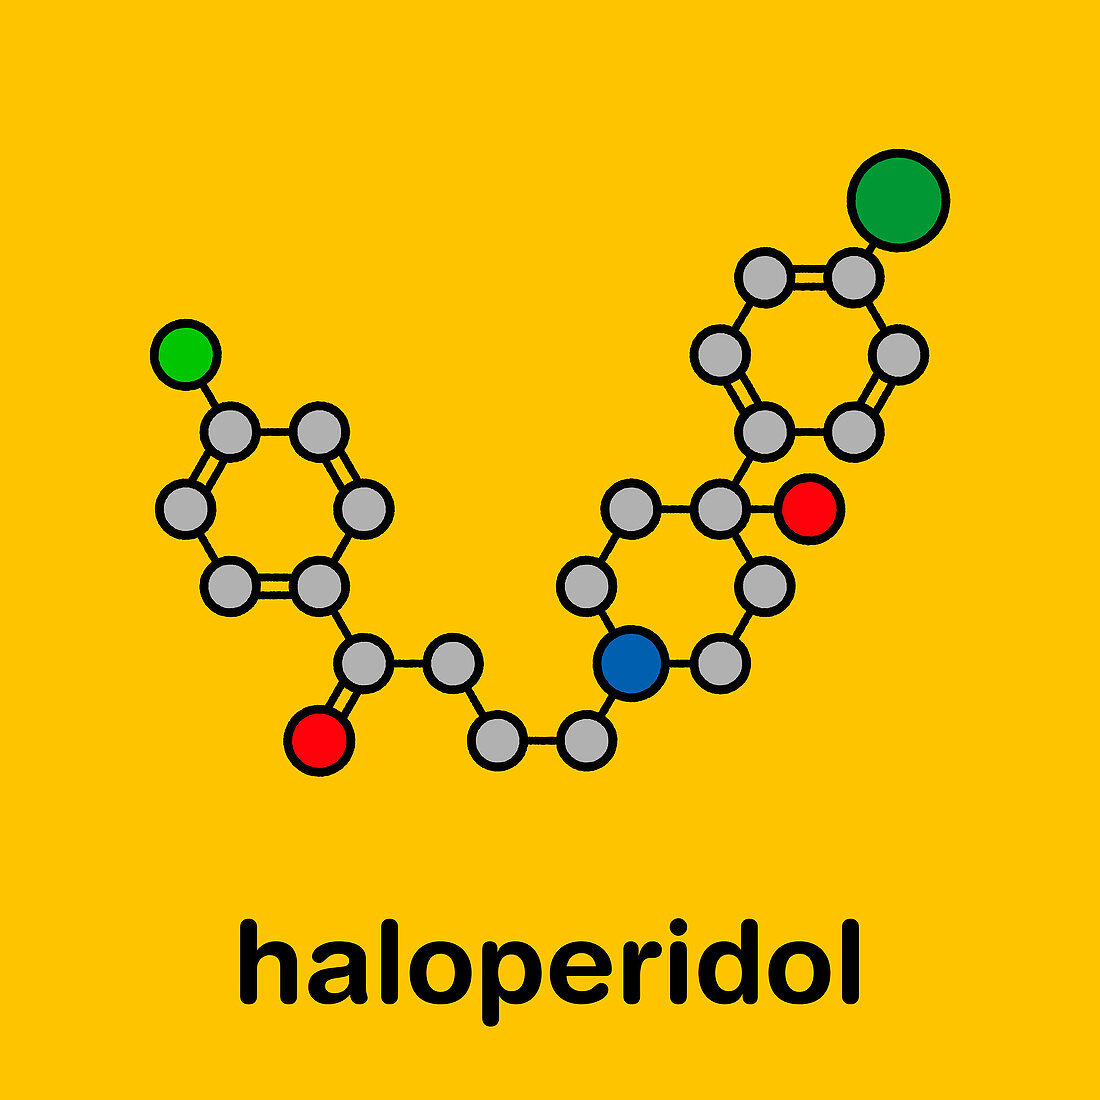 Haloperidol antipsychotic drug, molecular model